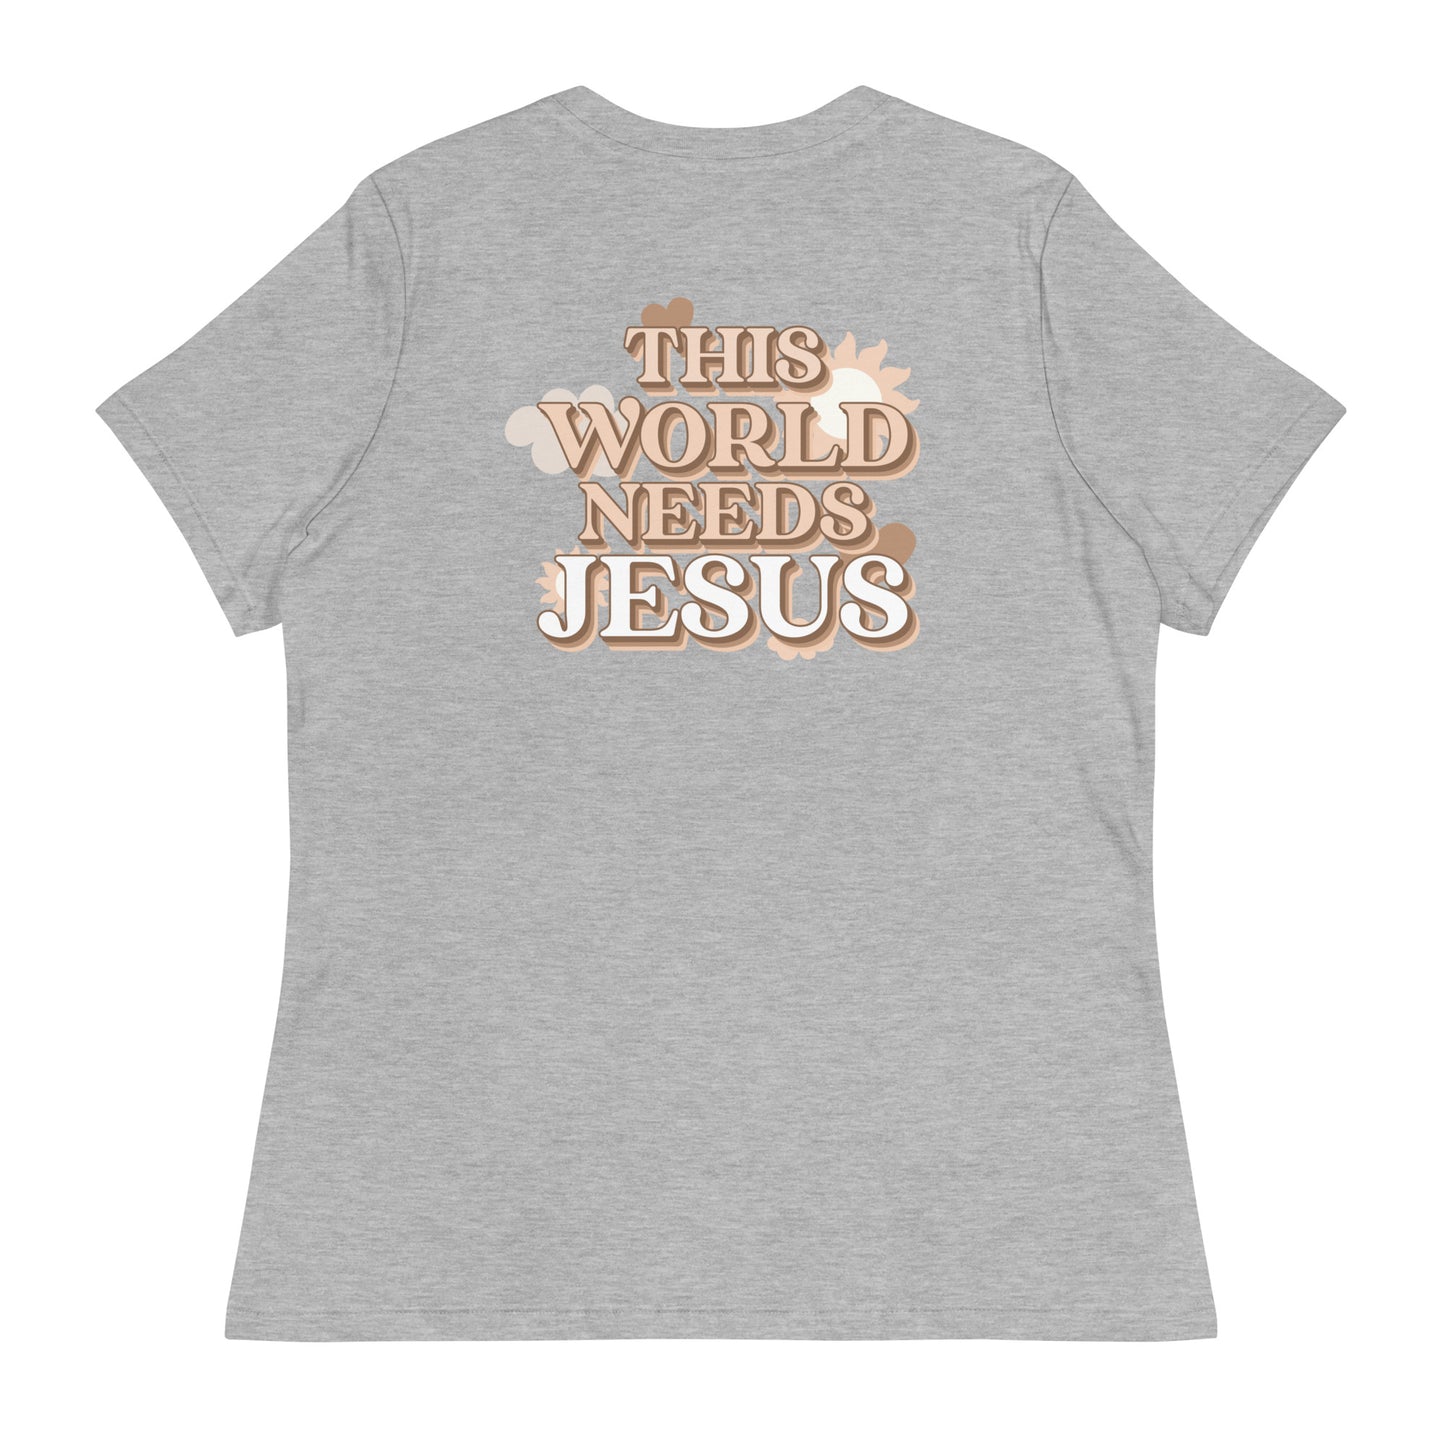 This World Needs Jesus ! - Women's Relaxed T-Shirt